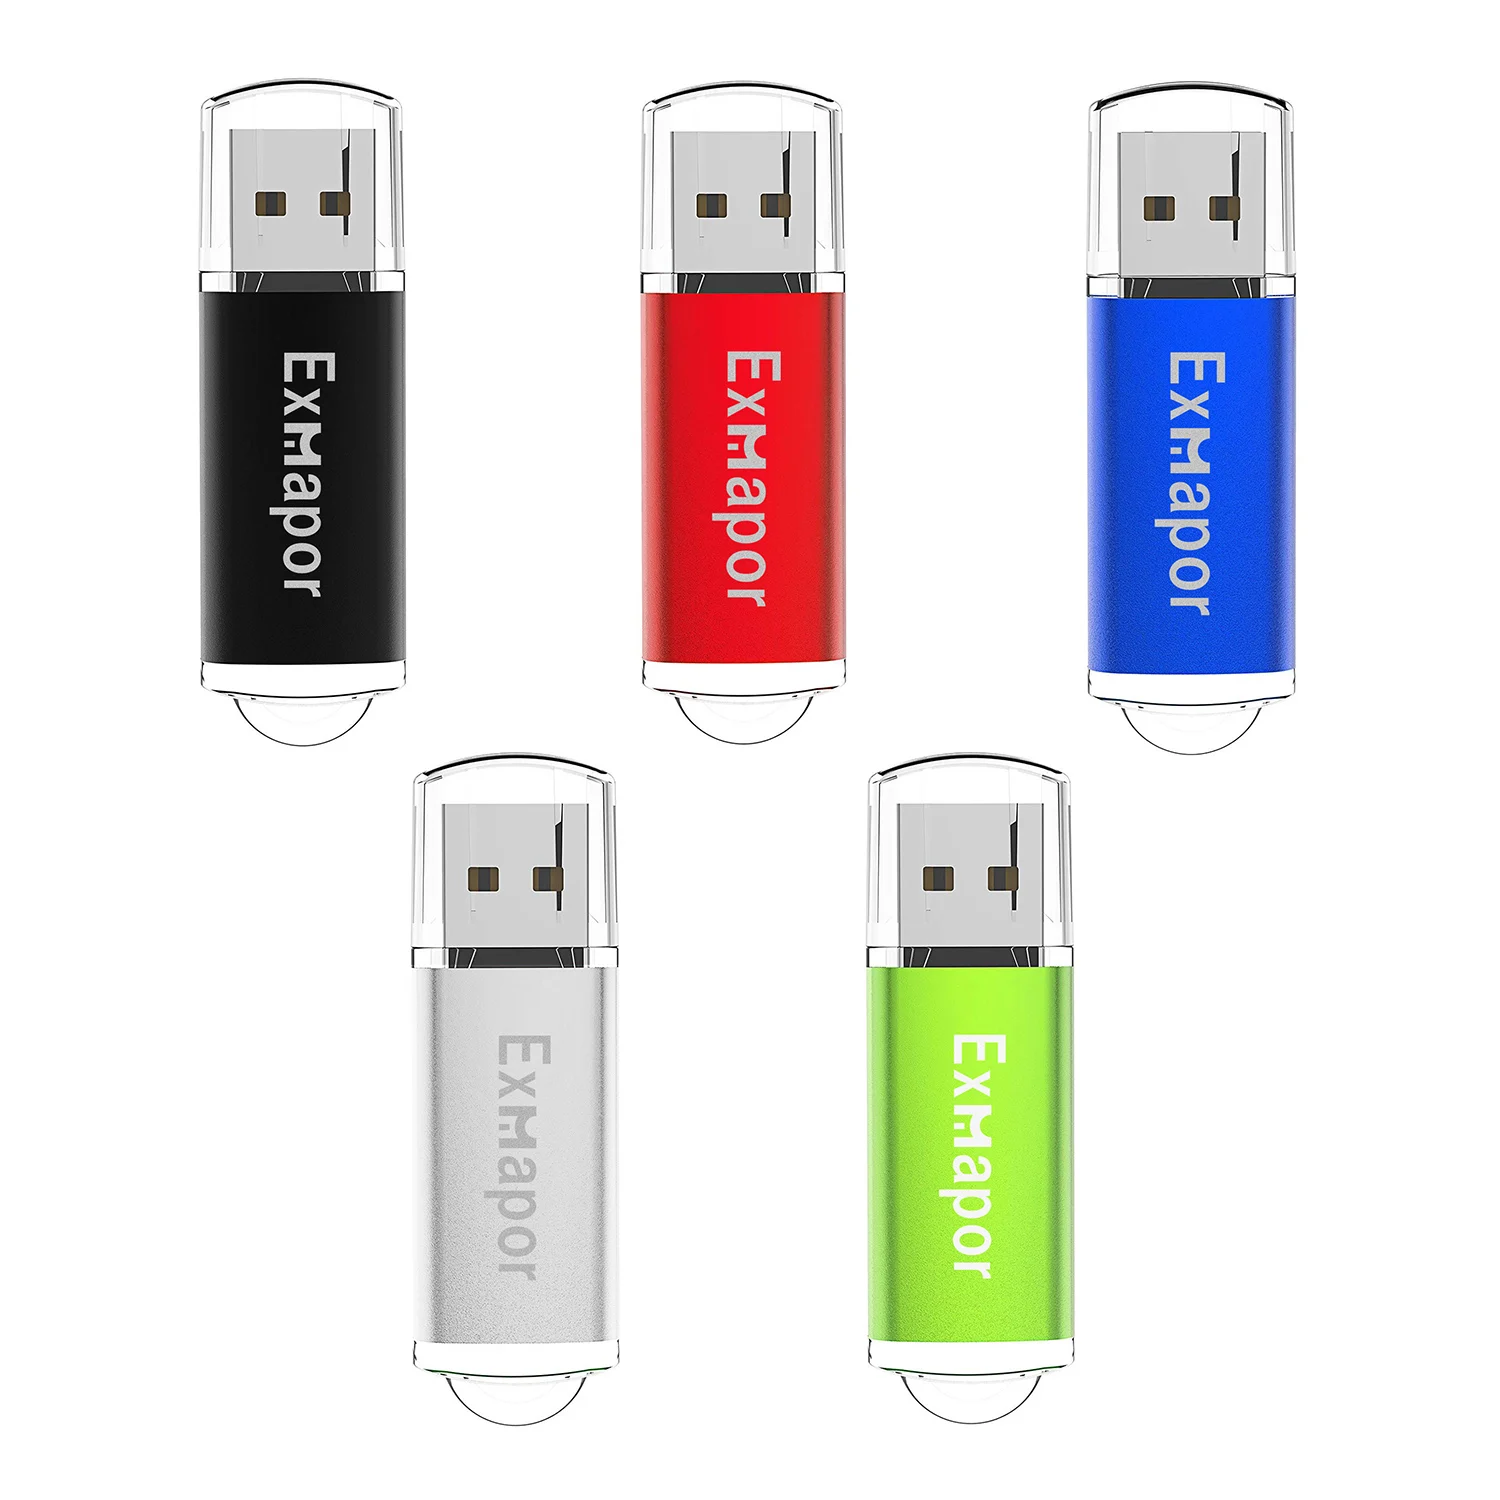 

8GB USB Flash Drive Pack of 5 Thumb Drives Bulk, Exmapor USB 2.0 Memory Sticks Rectangle Pen Drive 8 GB,Jump Drive Colorful